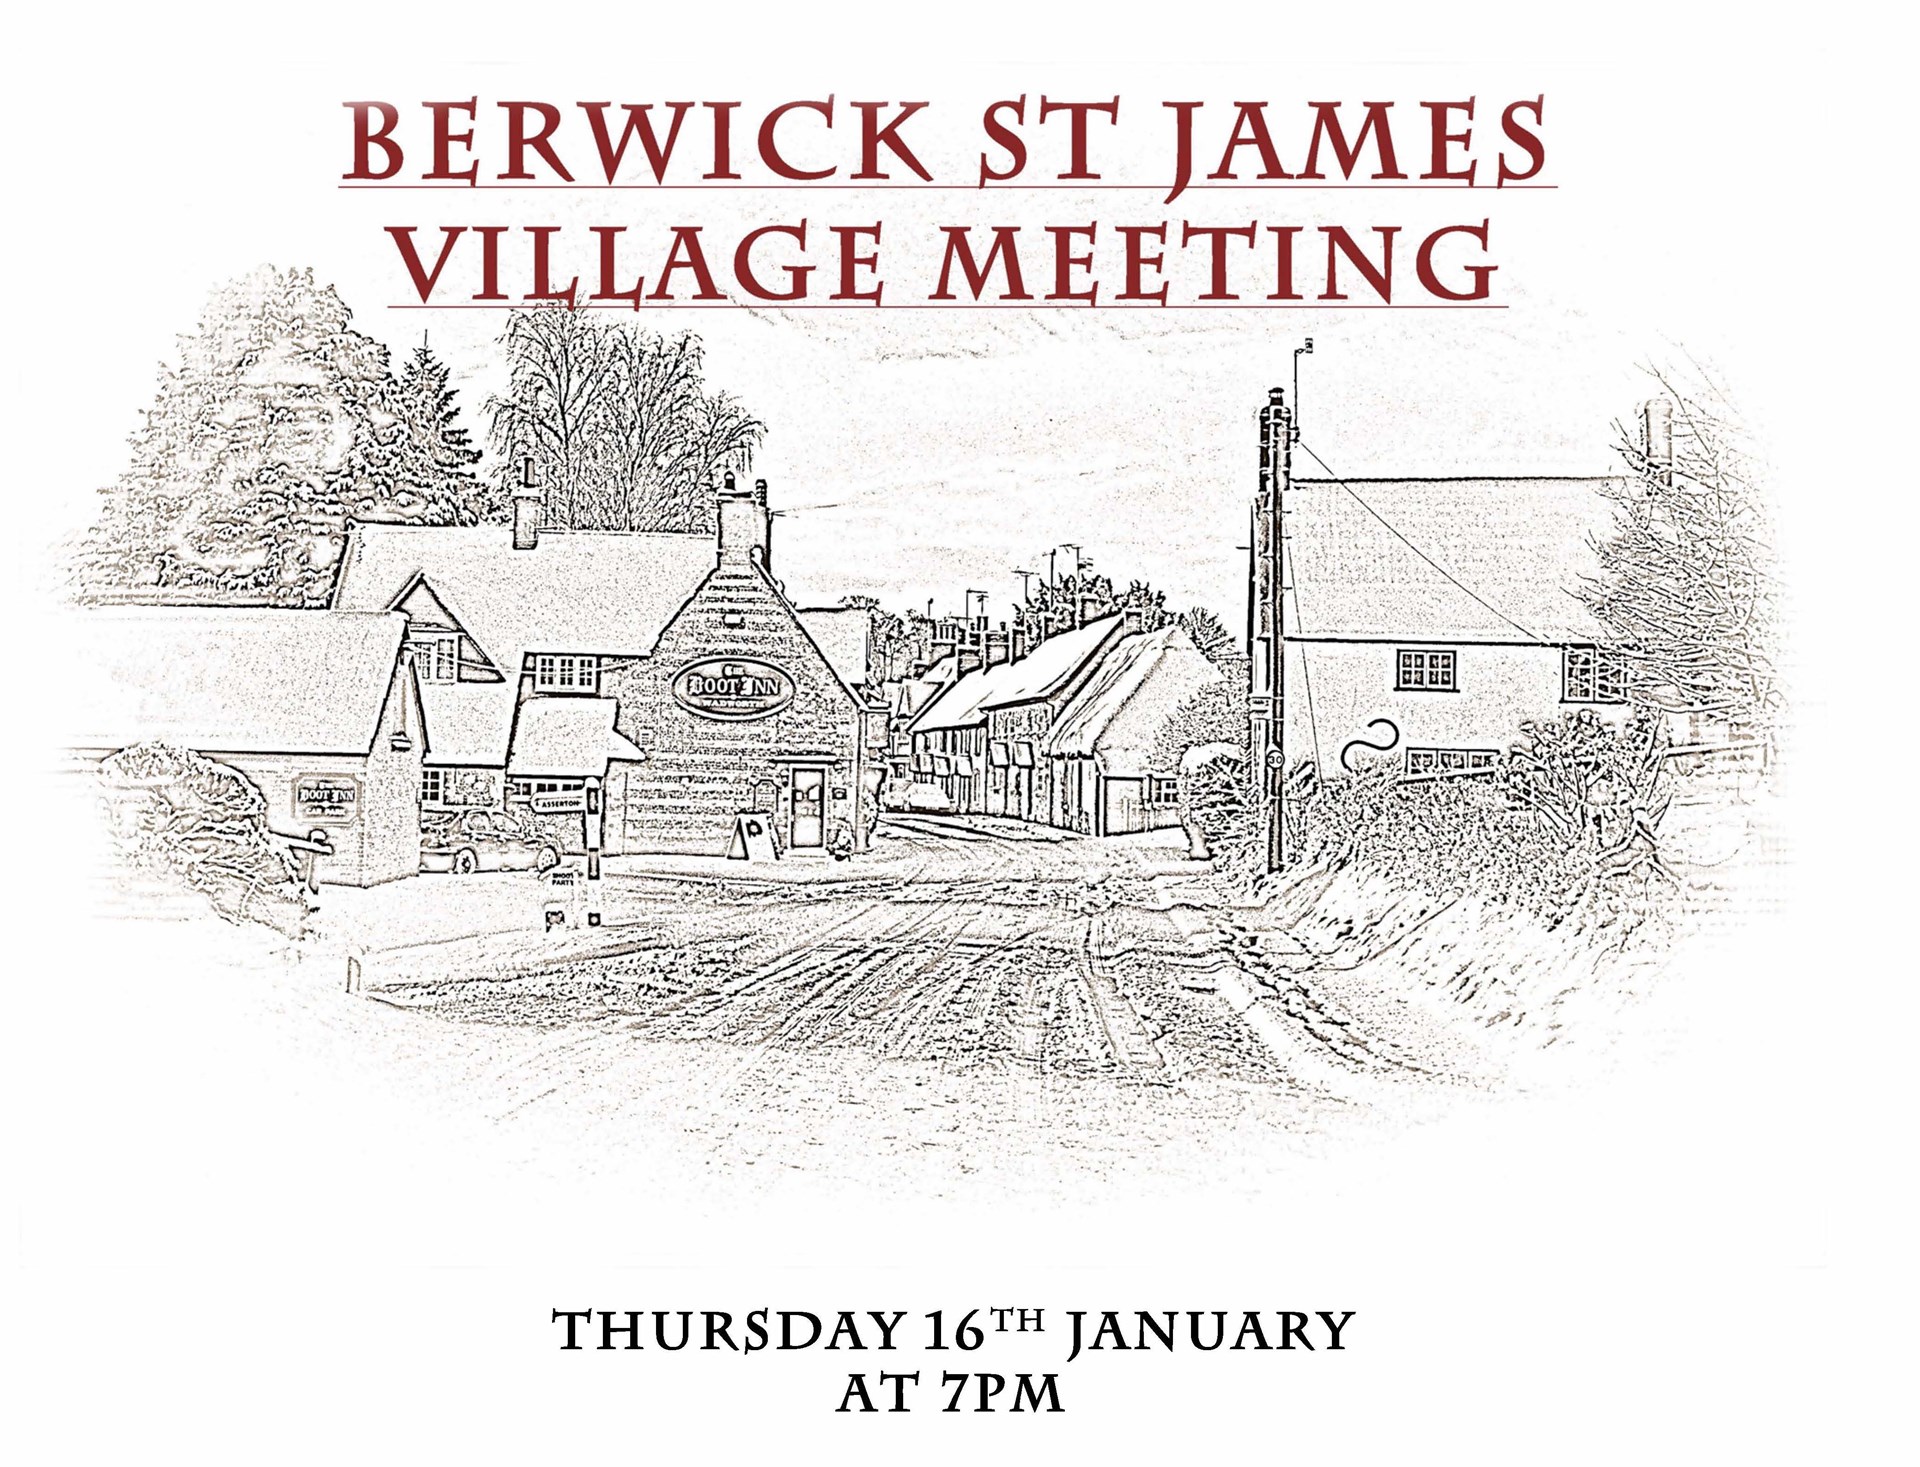 Berwick St James Parish Village Meeting - 16 January '14